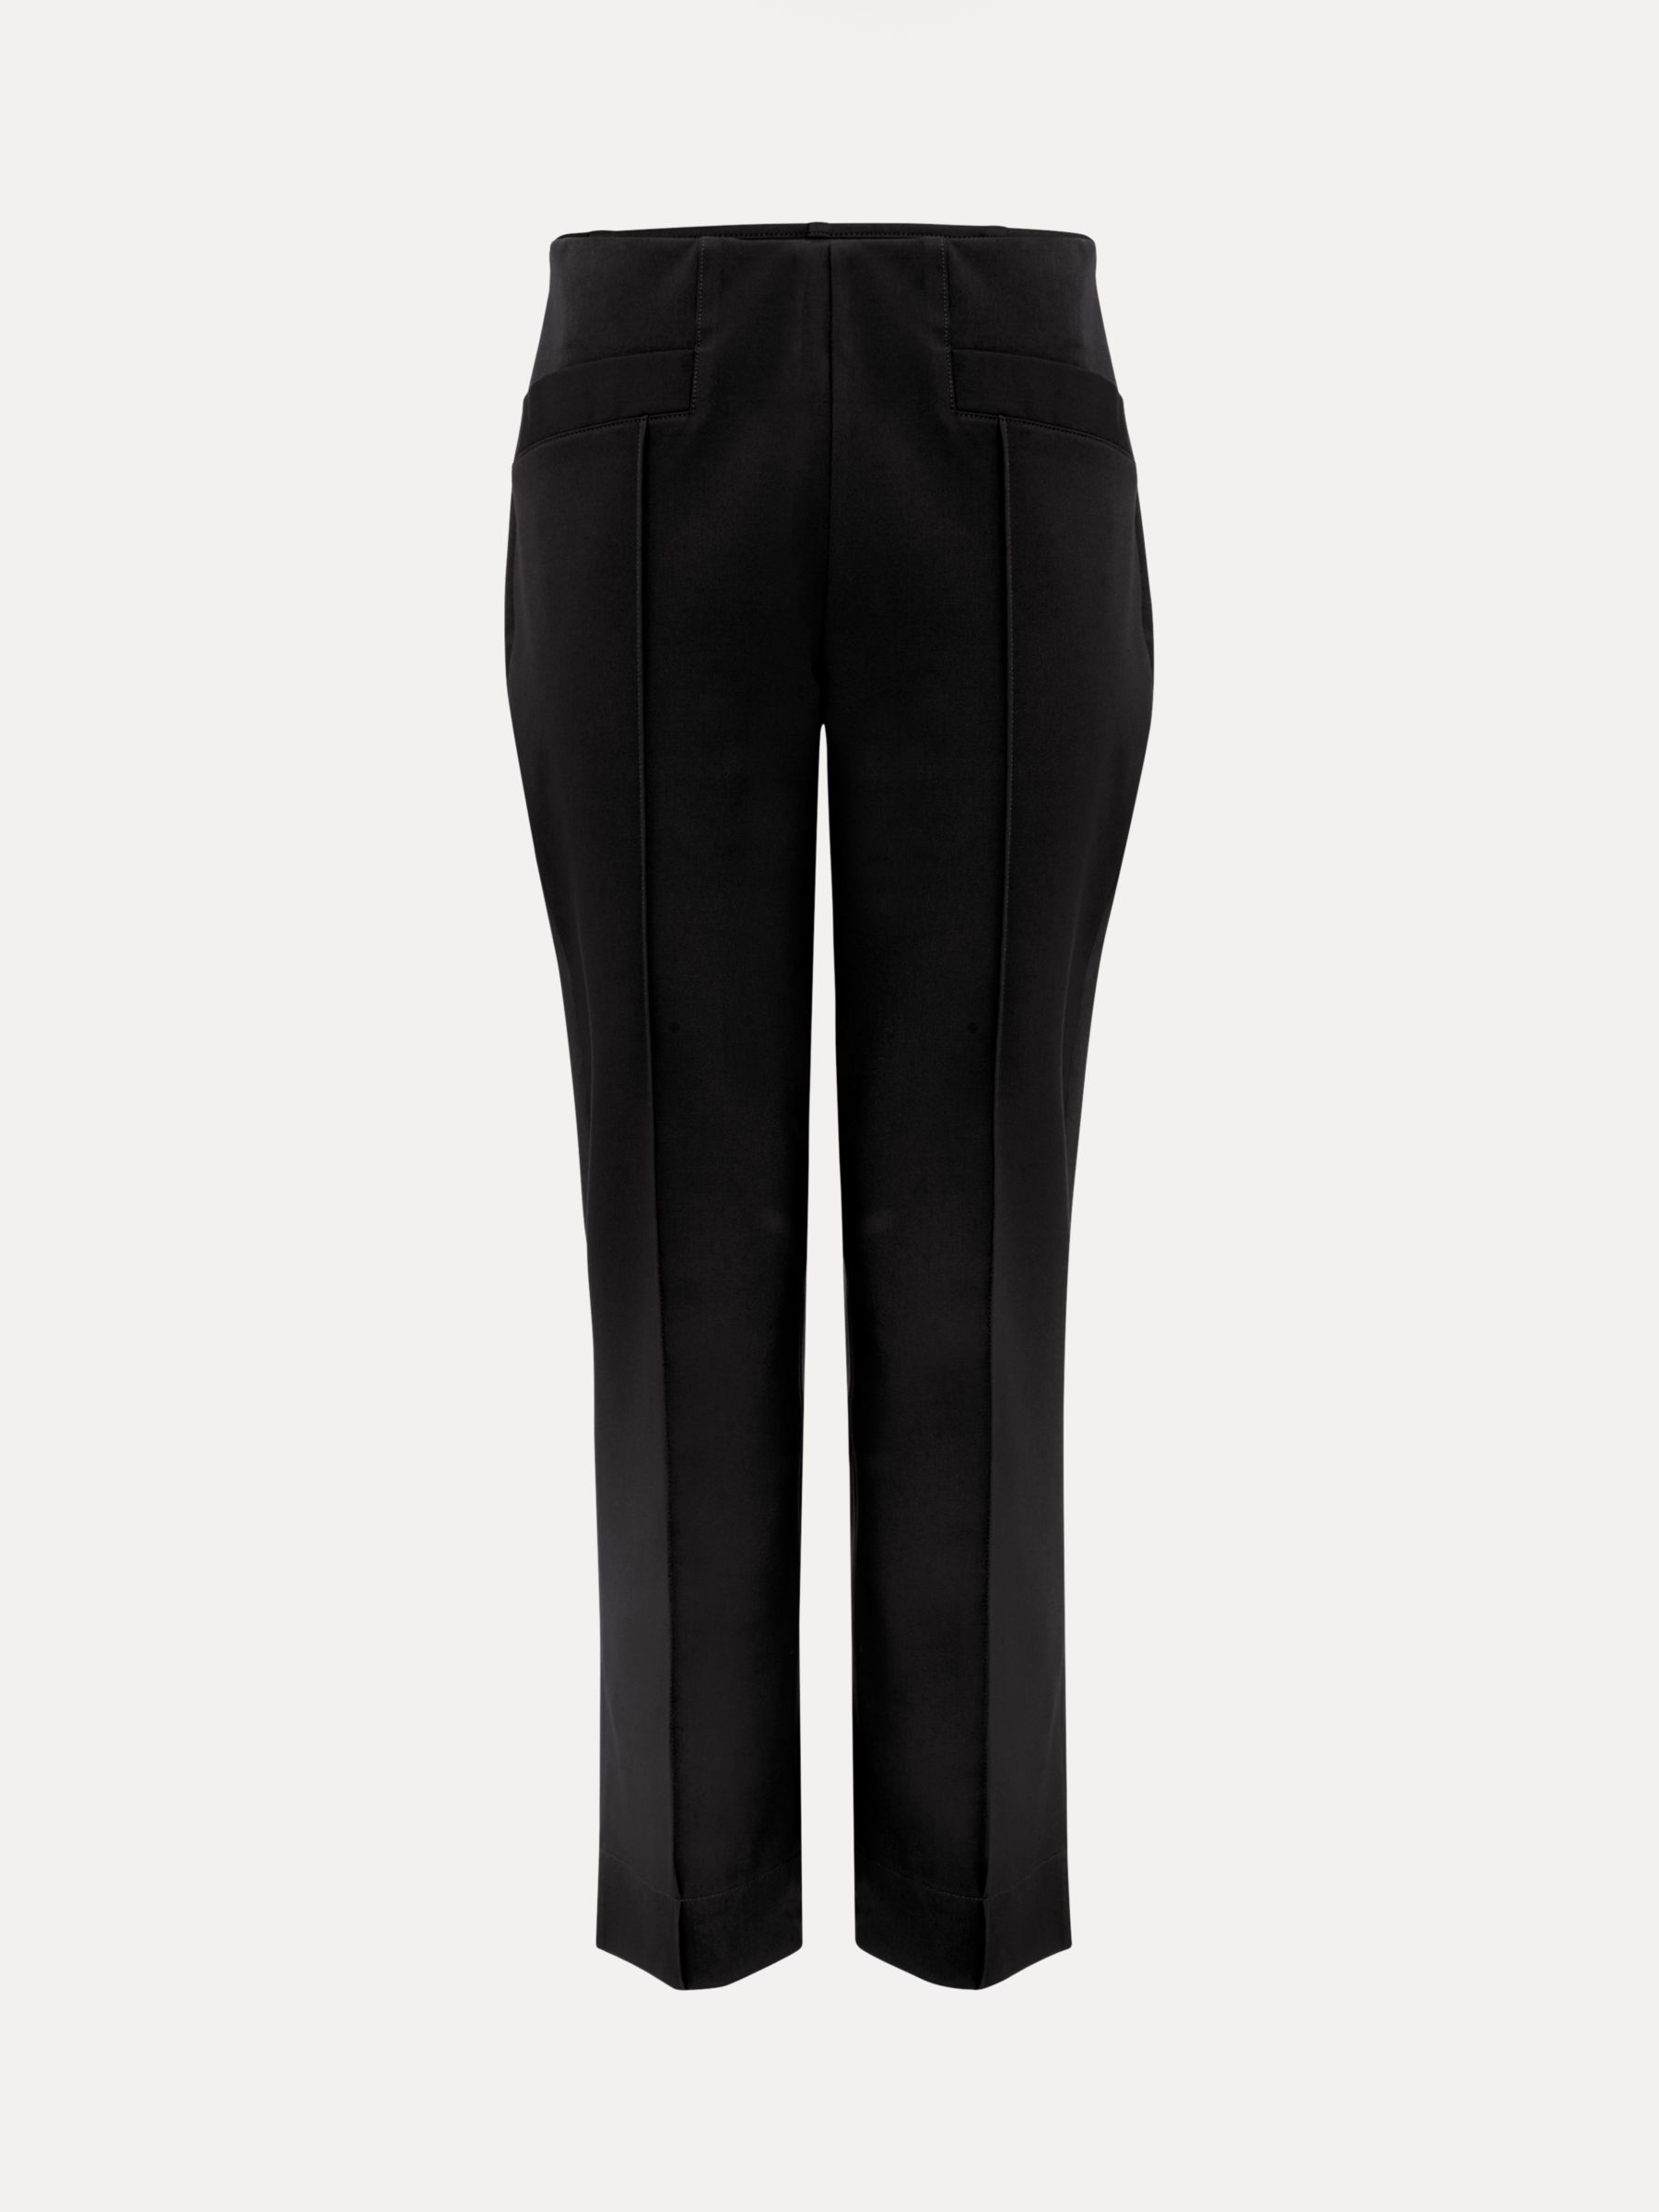 Phase Eight Miah Stretch Capri Trousers, Black, 8